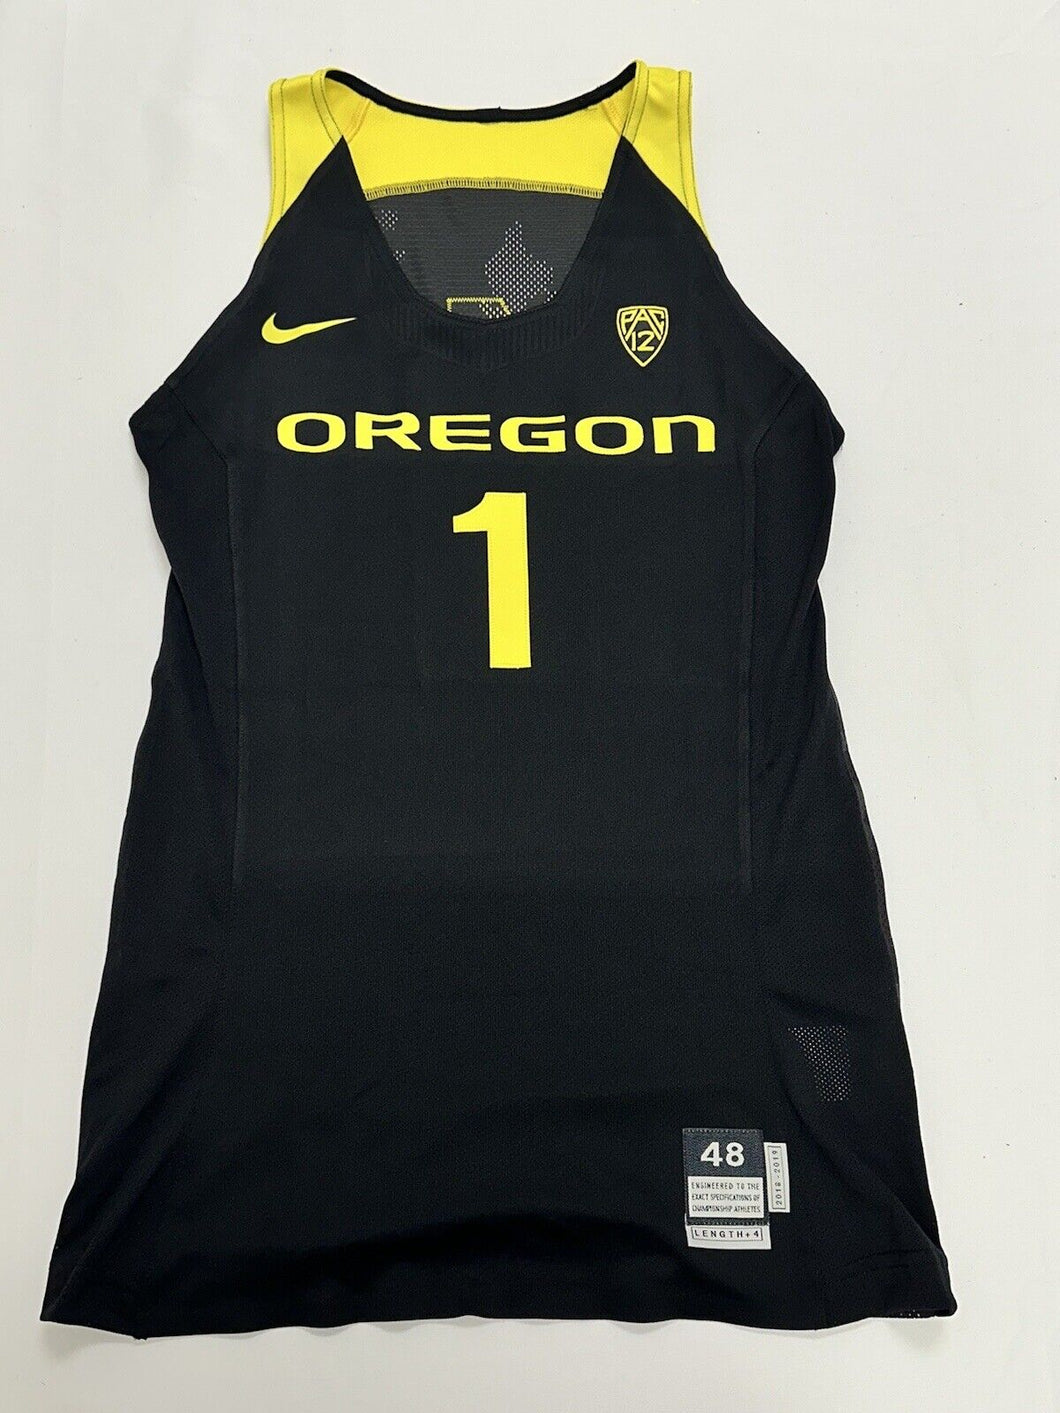 2018 Oregon Ducks Game Used / Worn Womens NCAA Basketball Jersey - Size 48 #1